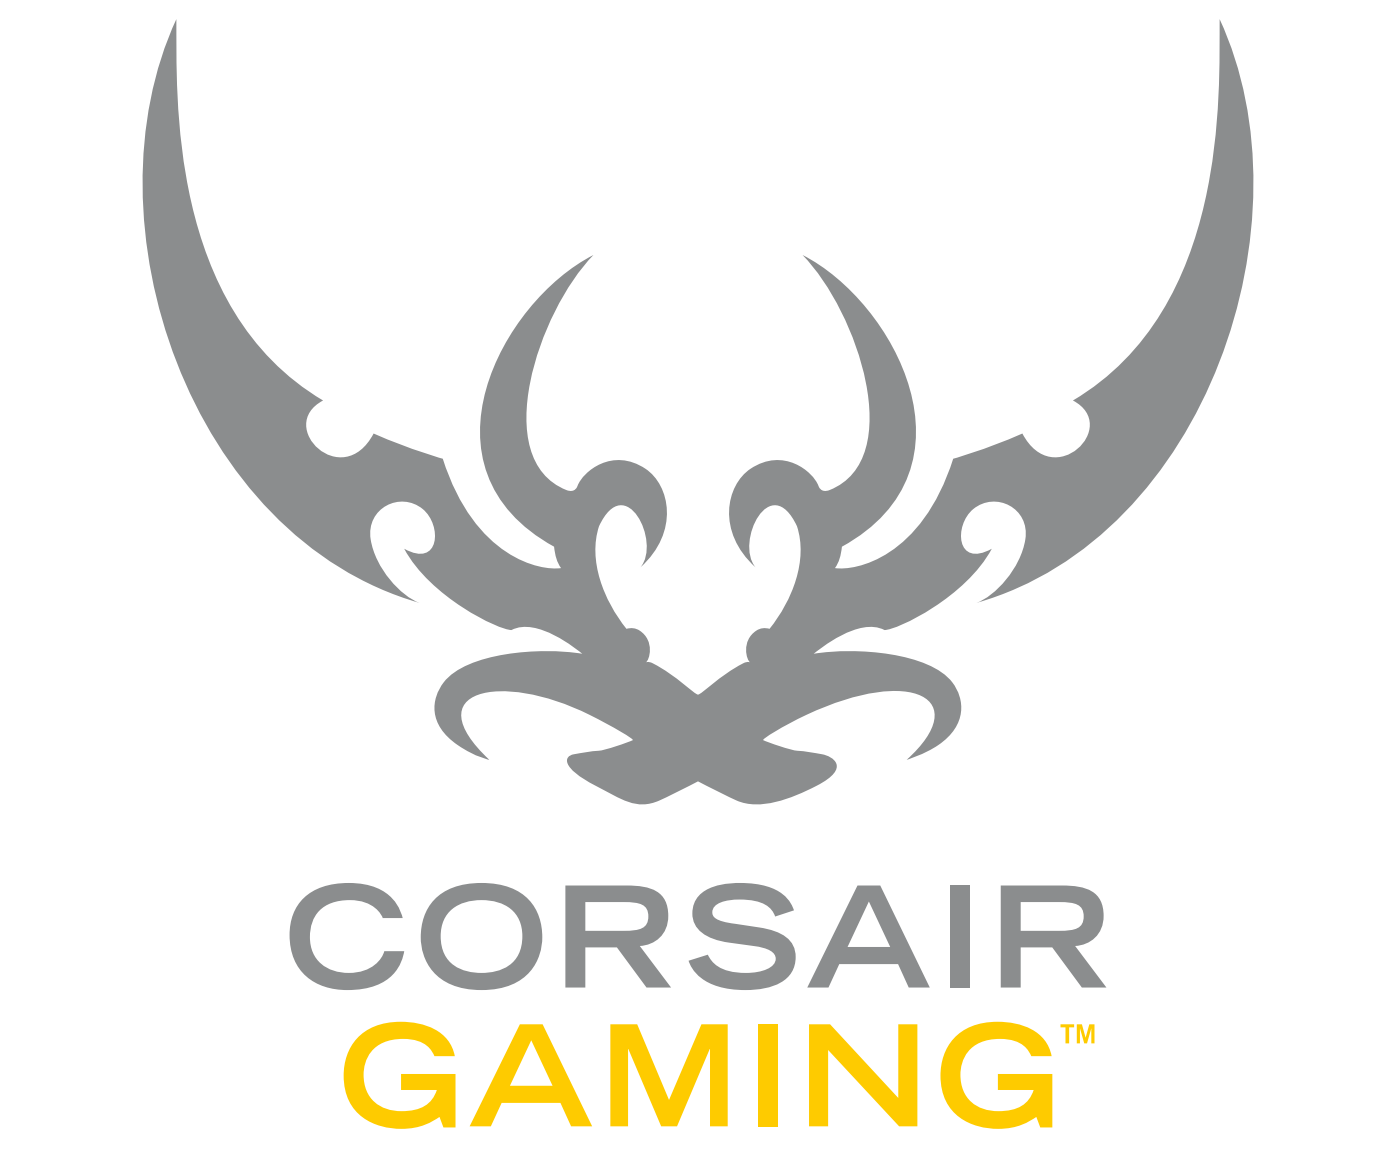 Corsair u2014 High performanc